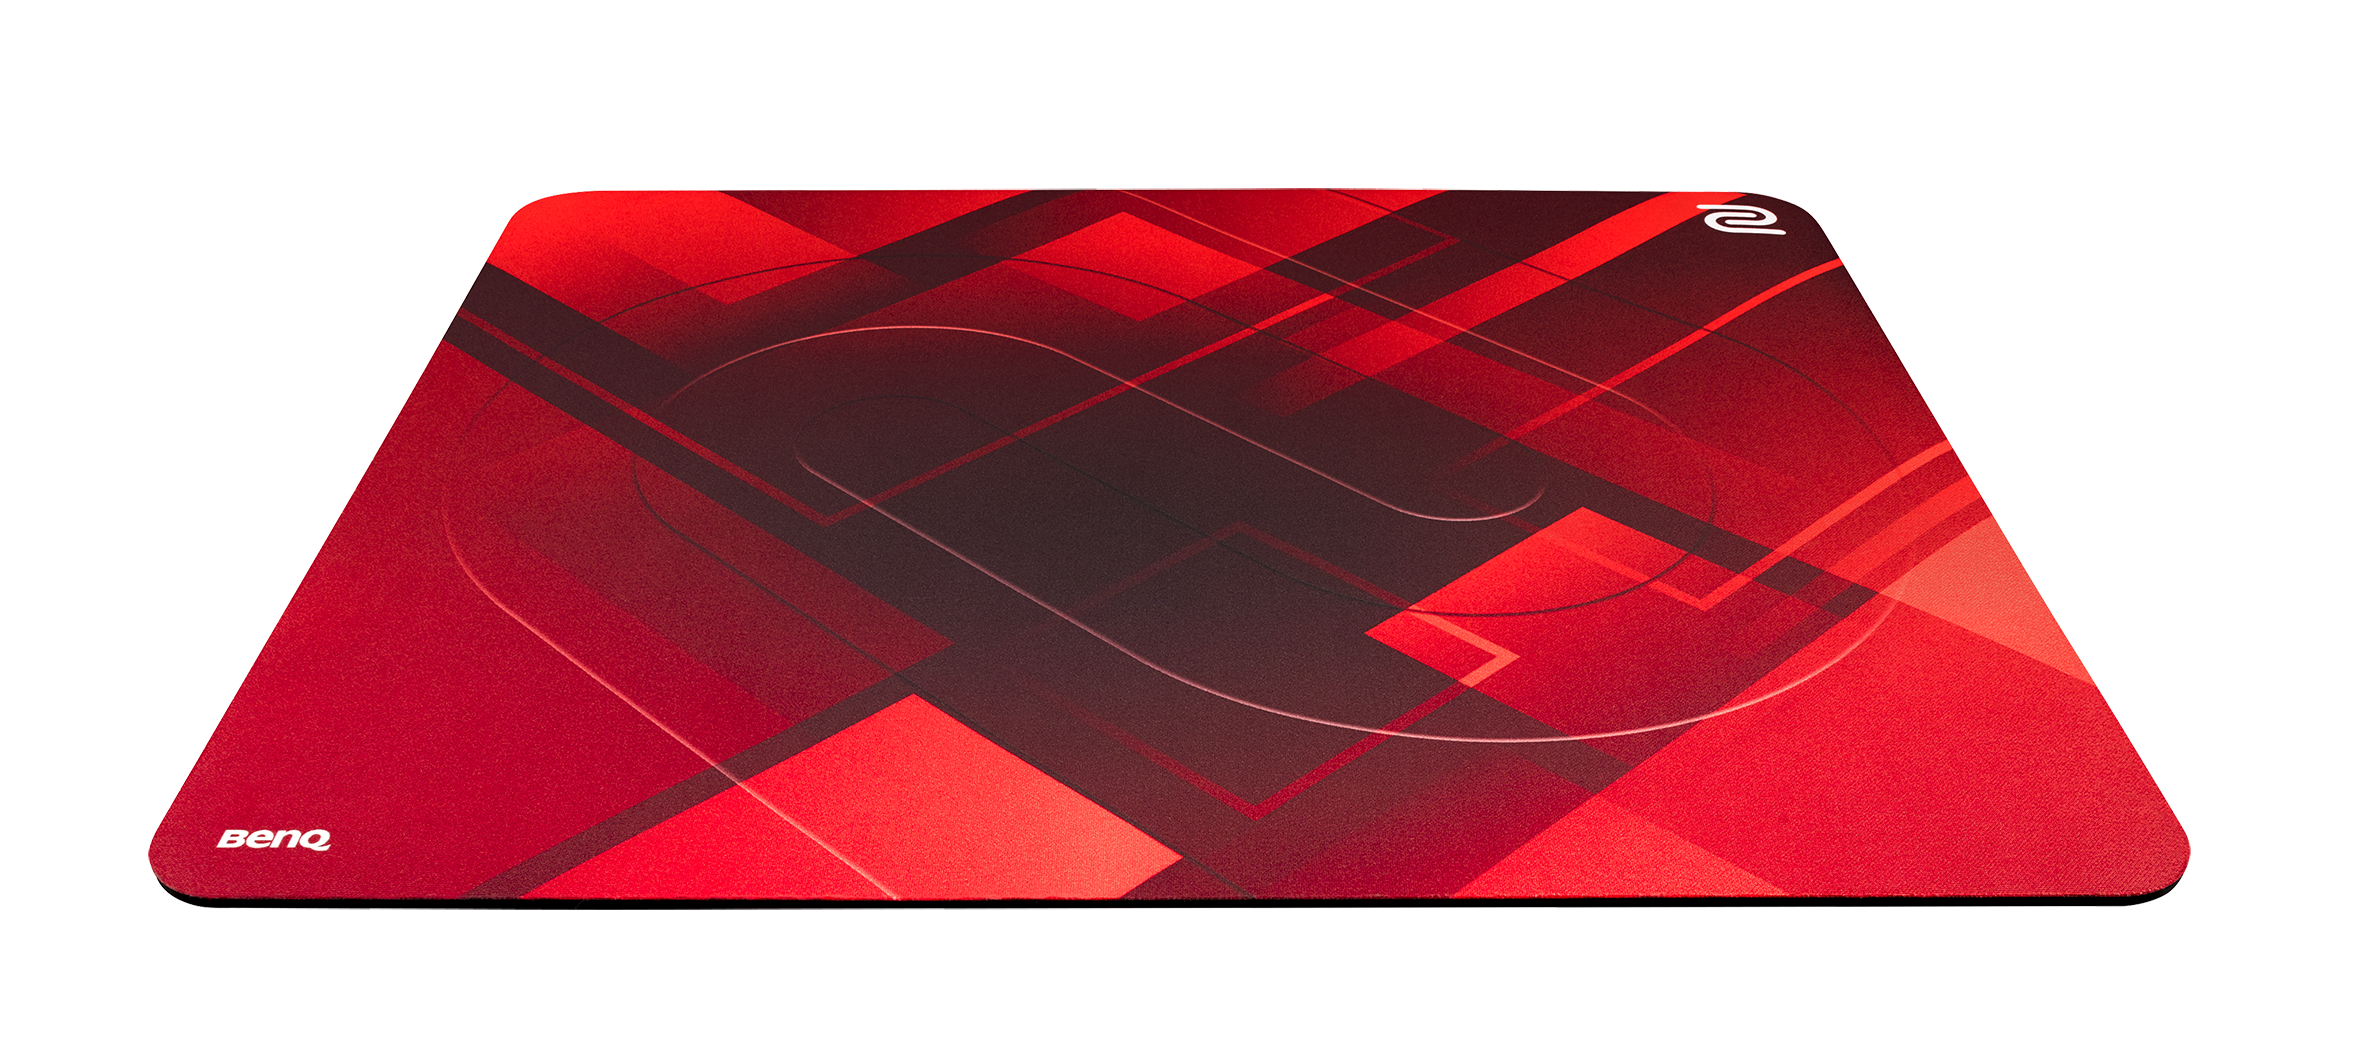 BenQ Asia Pacific announces G-SR-SE Red Esports Mousepads is now